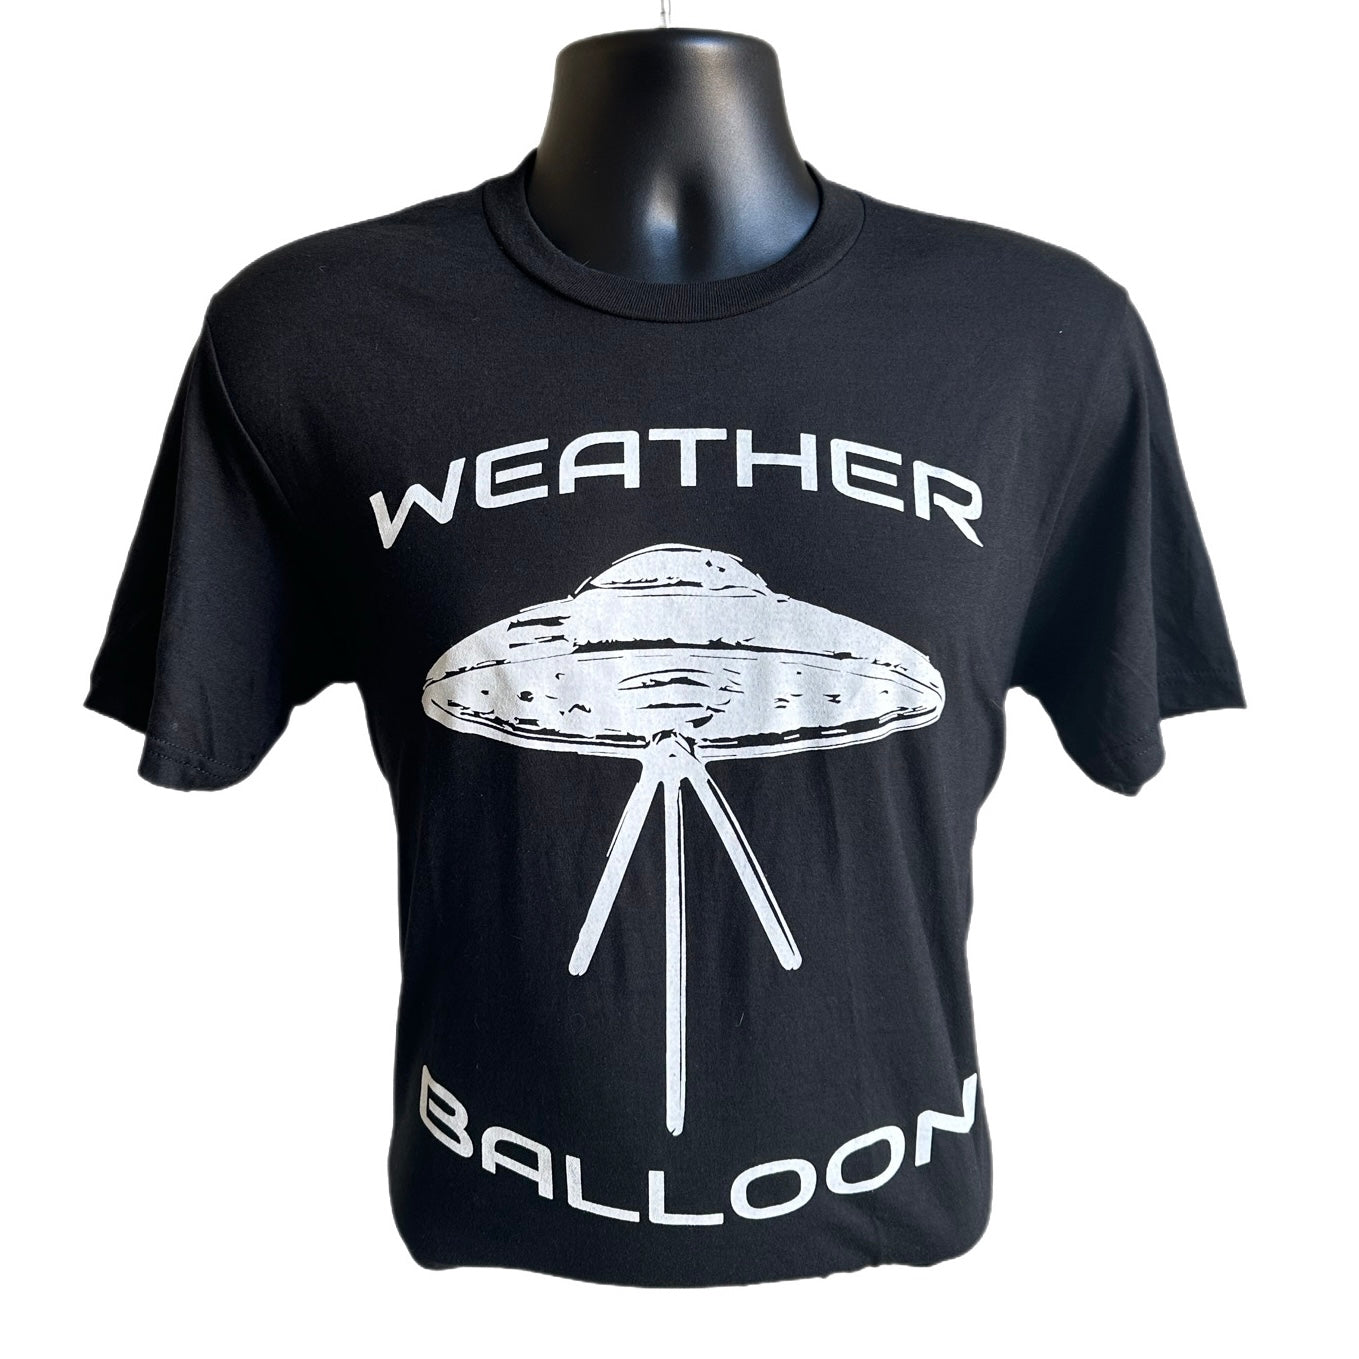 Weather Balloon T-Shirt